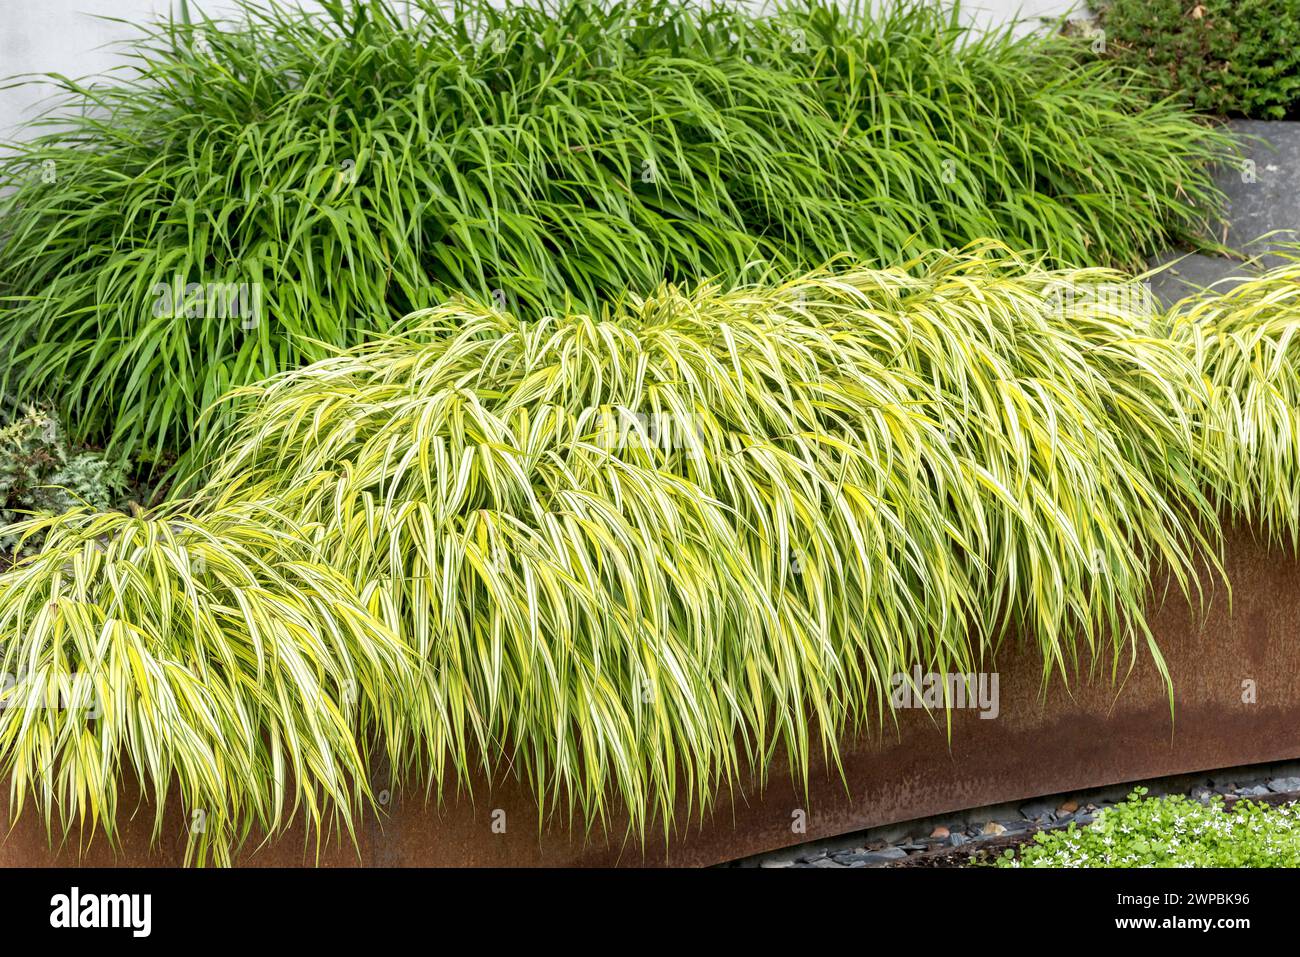 Japanese forest grass, Hakone grass (Hakonechloa macra 'Aureola', Hakonechloa macra Aureola), cultivar Aureola, Europe, Bundesrepublik Deutschland Stock Photo